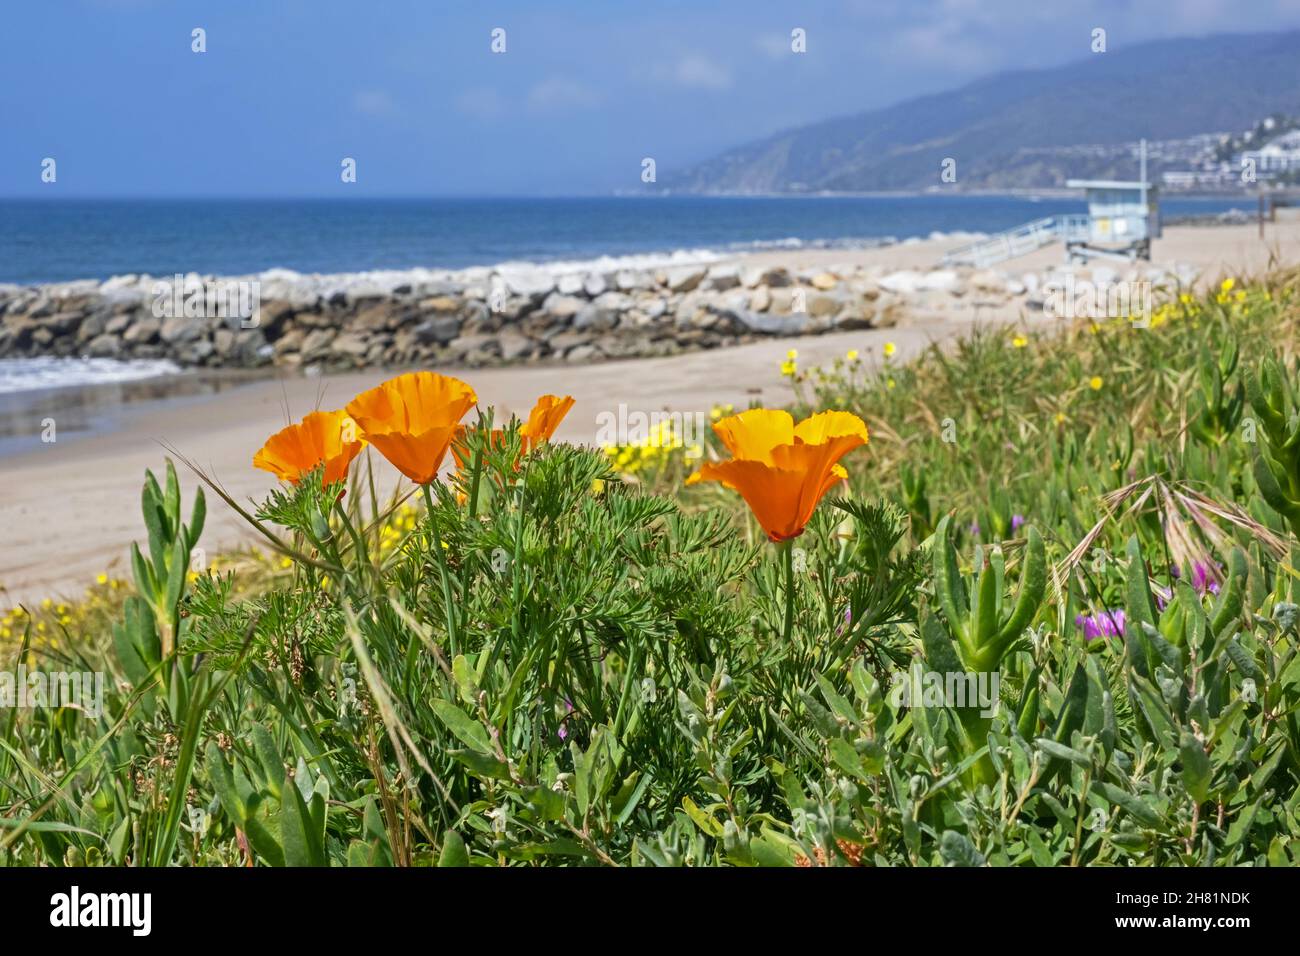 California poppies / golden poppy (Eschscholzia californica) on beach along the Pacific coast in Malibu, Los Angeles, California, United States / USA Stock Photo